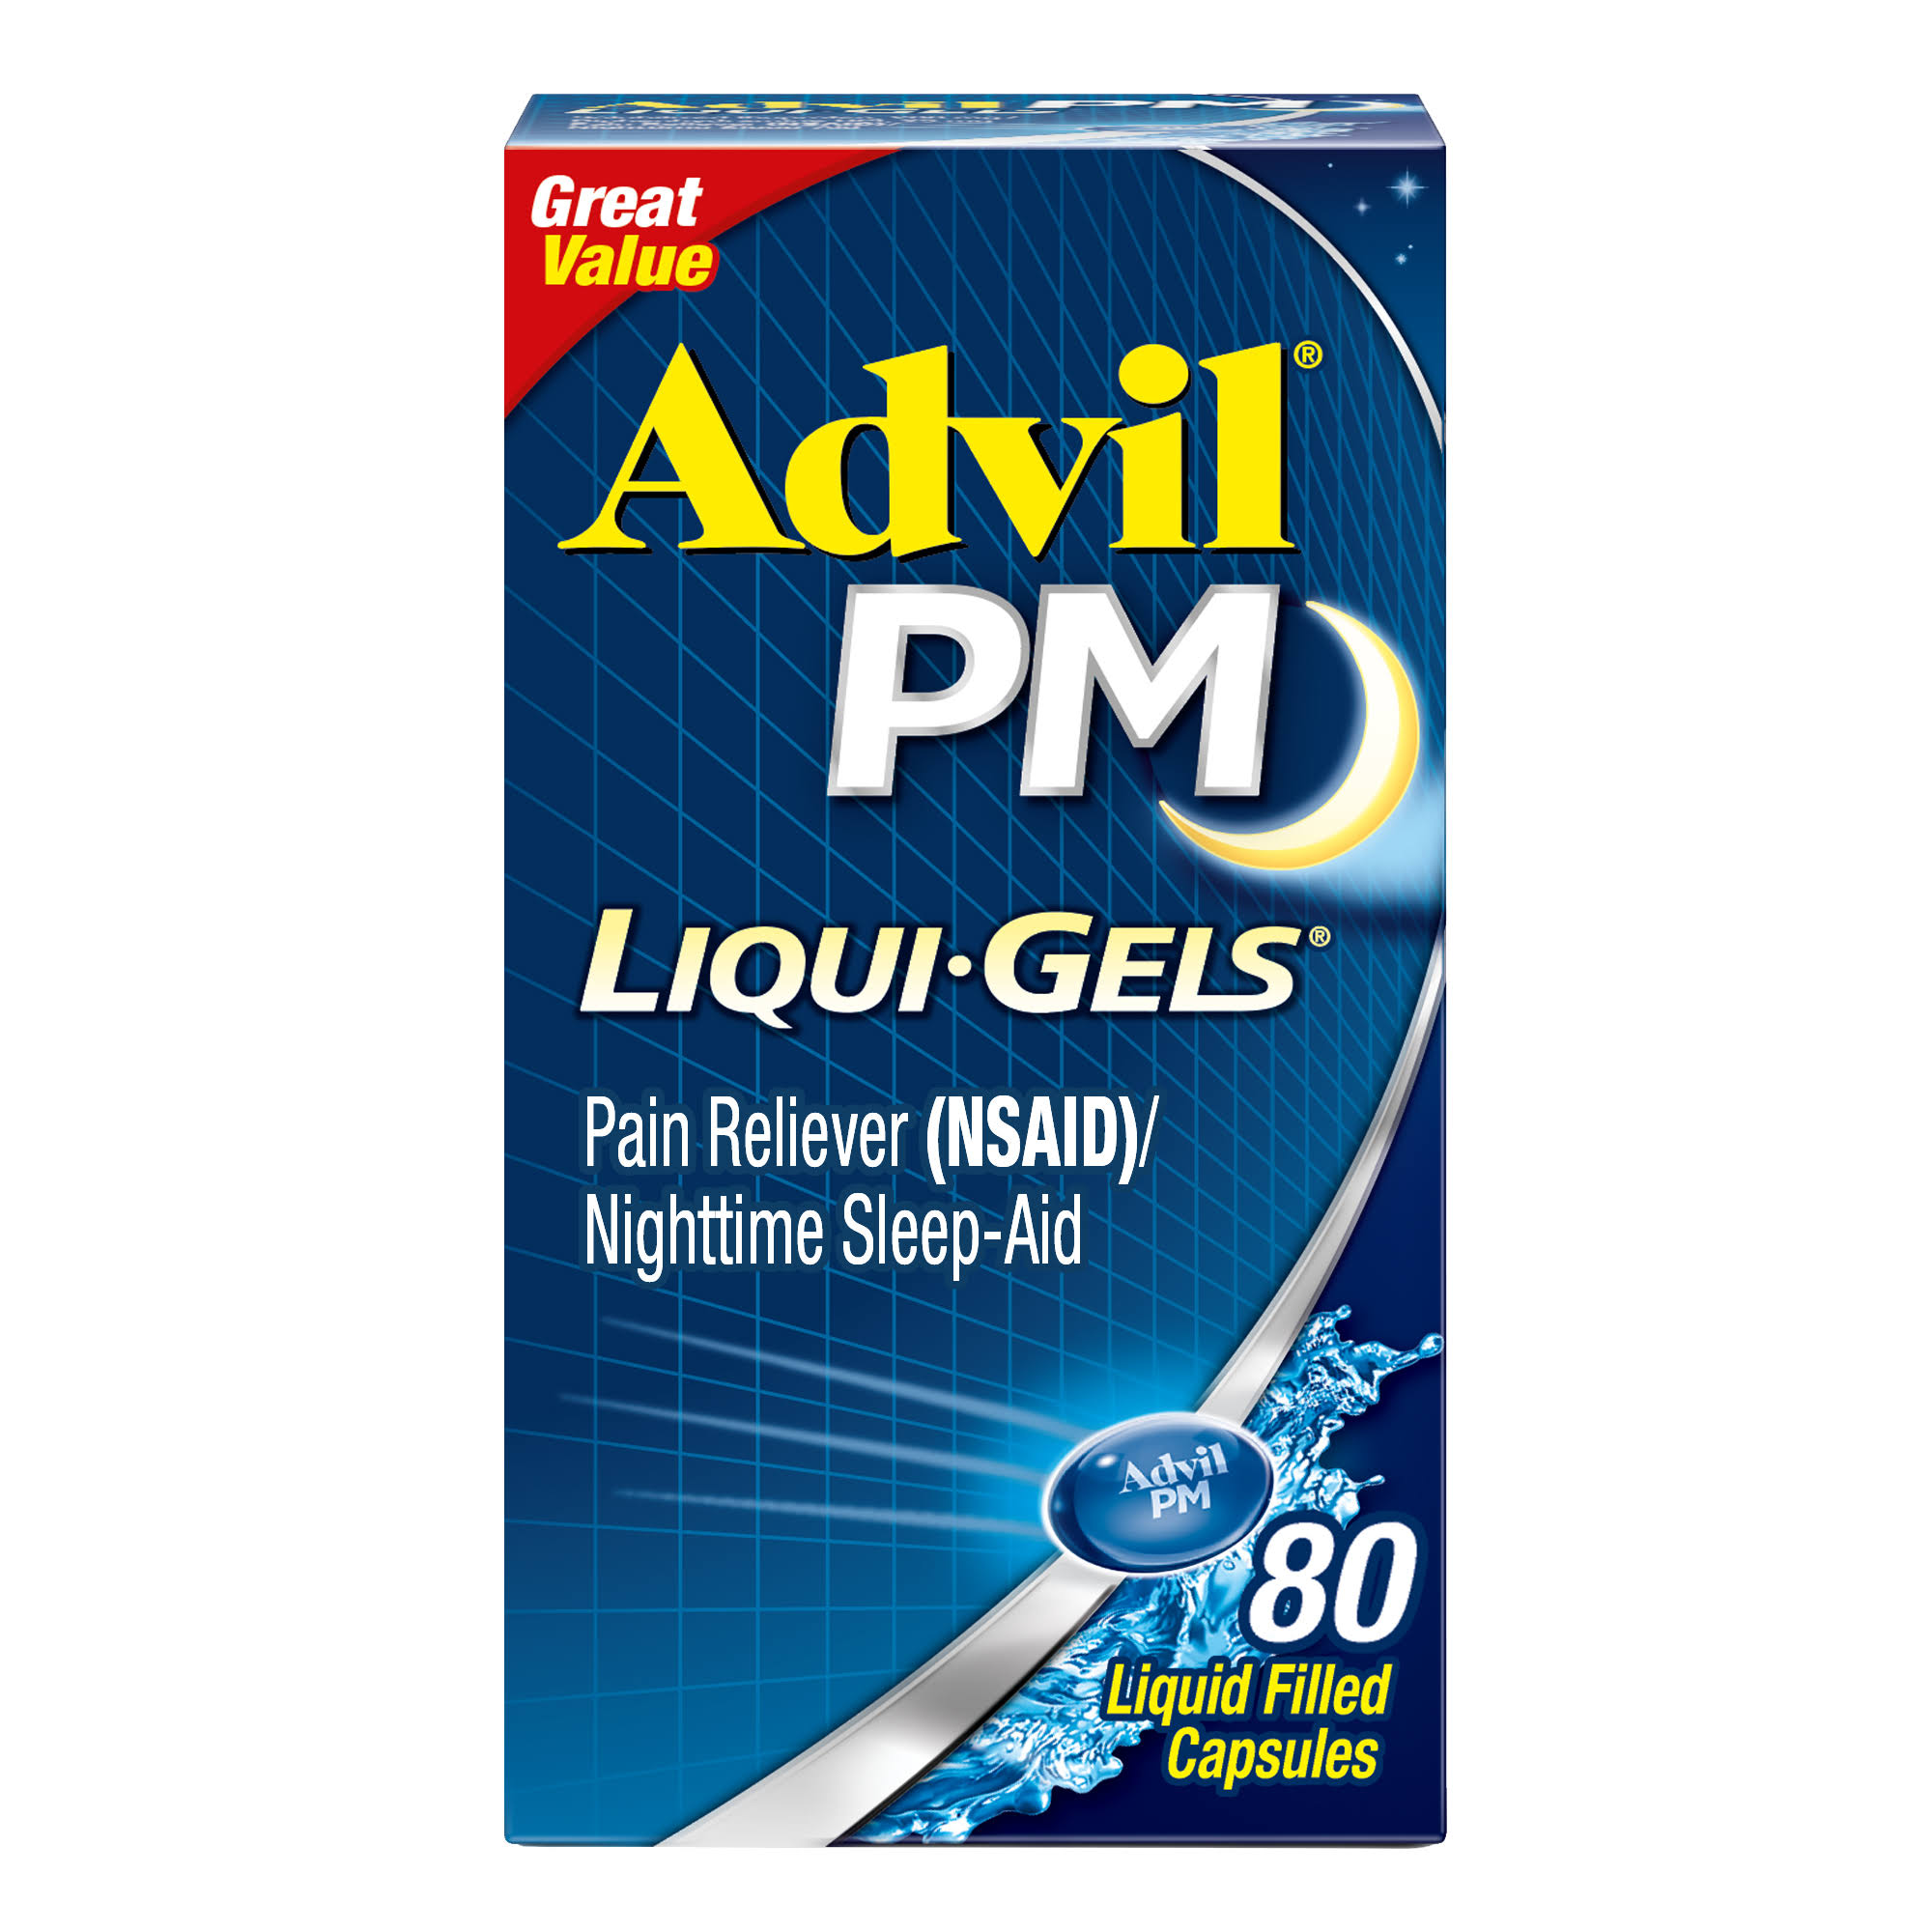 Advil PM Pain Reliever/Nighttime Sleep-Aid, Liqui Gels, Capsules - 80 capsules